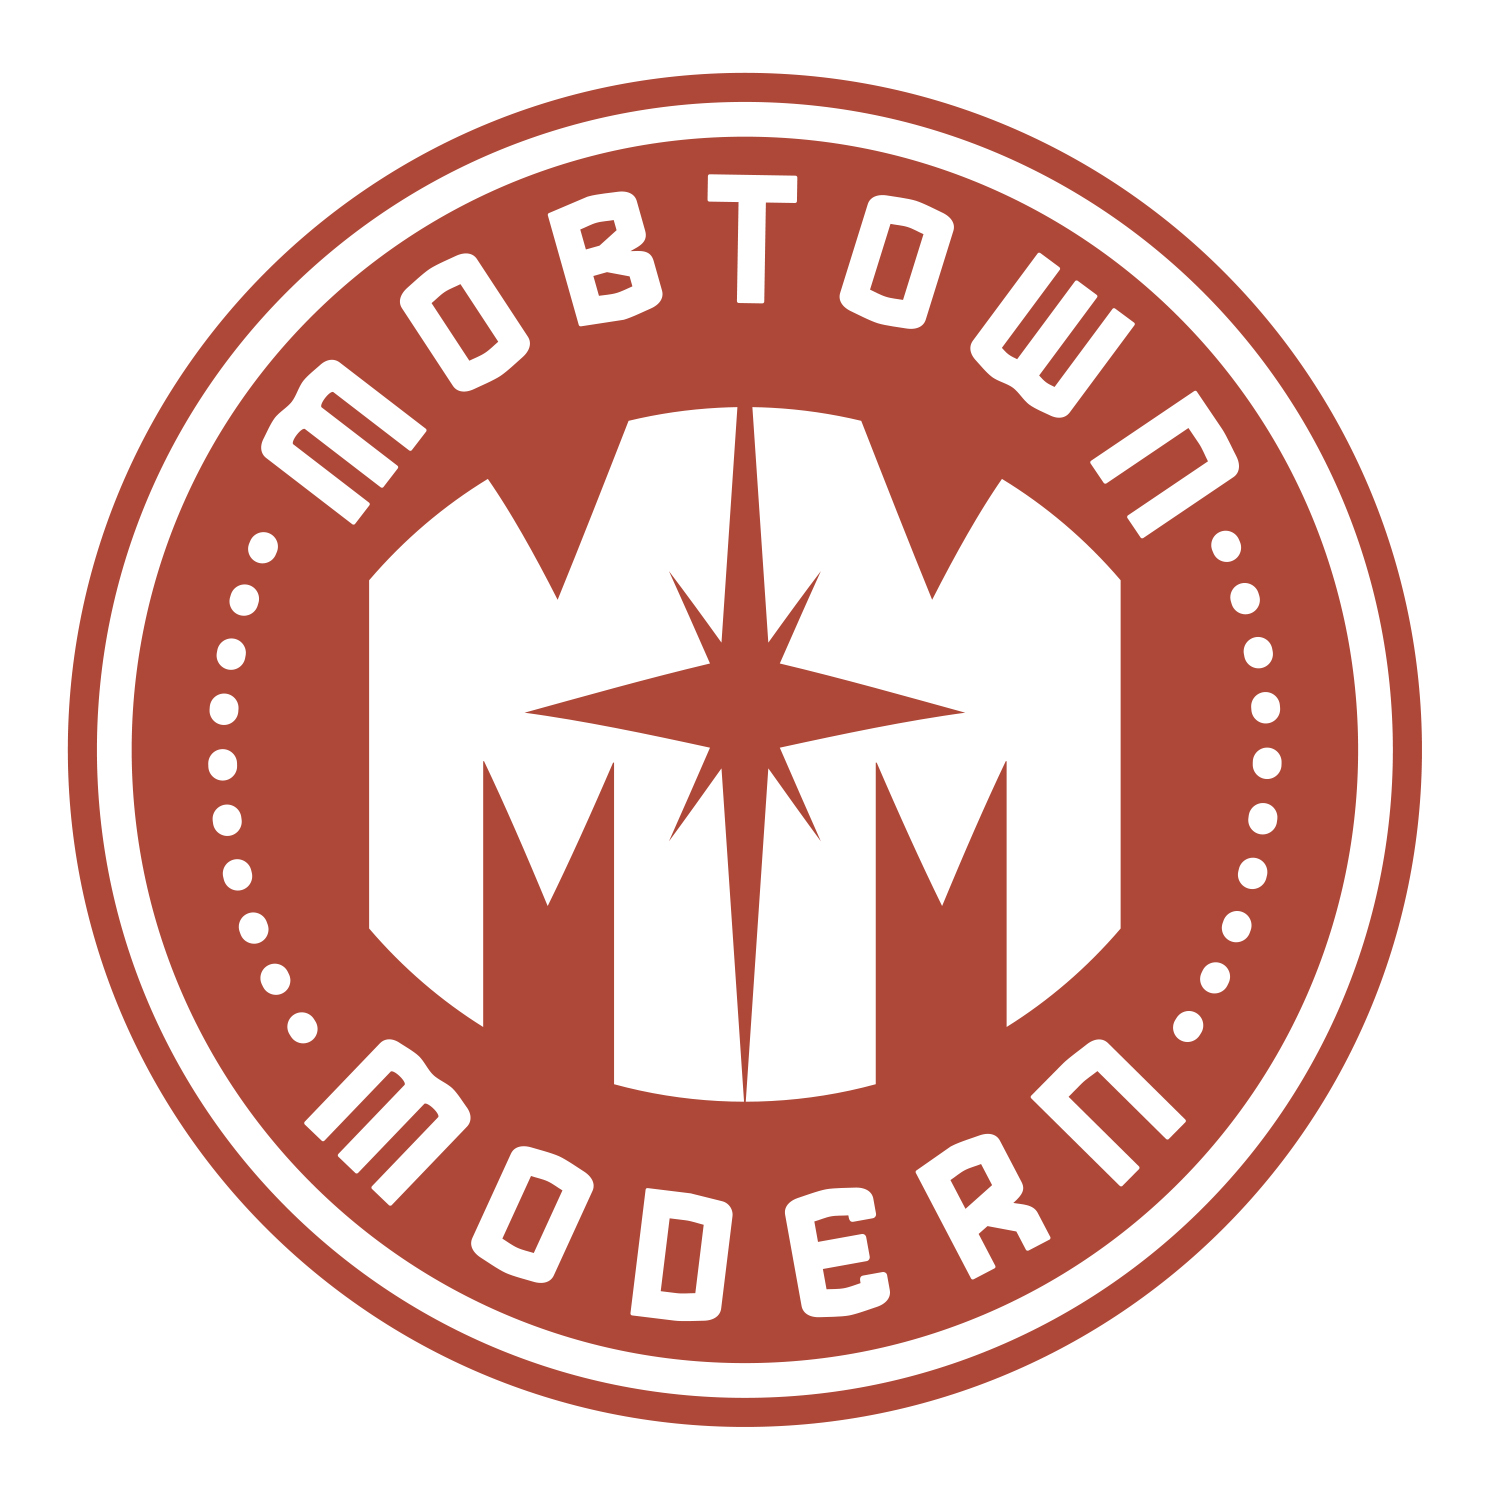 Mobtown Modern